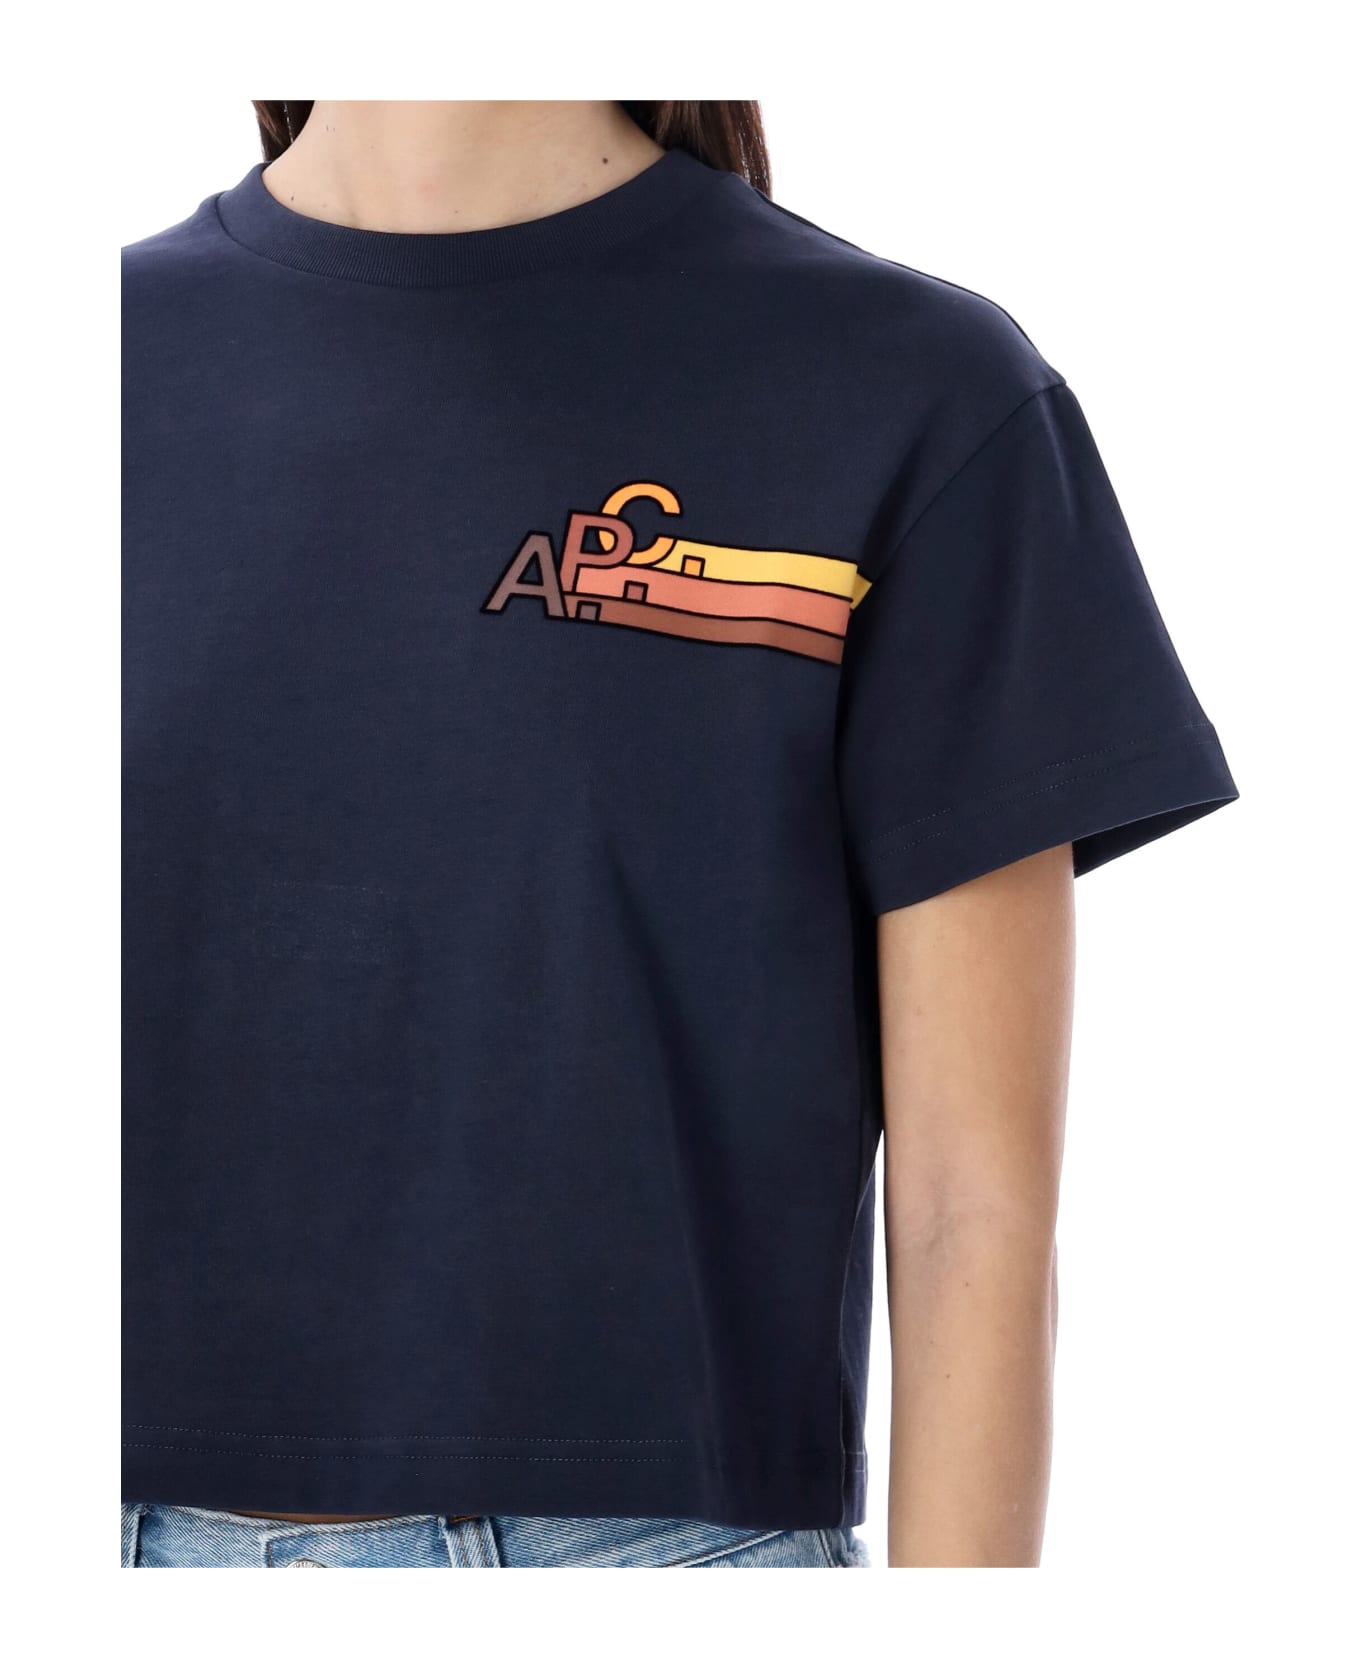 A.P.C. T-shirt Sonia - DARK NAVY